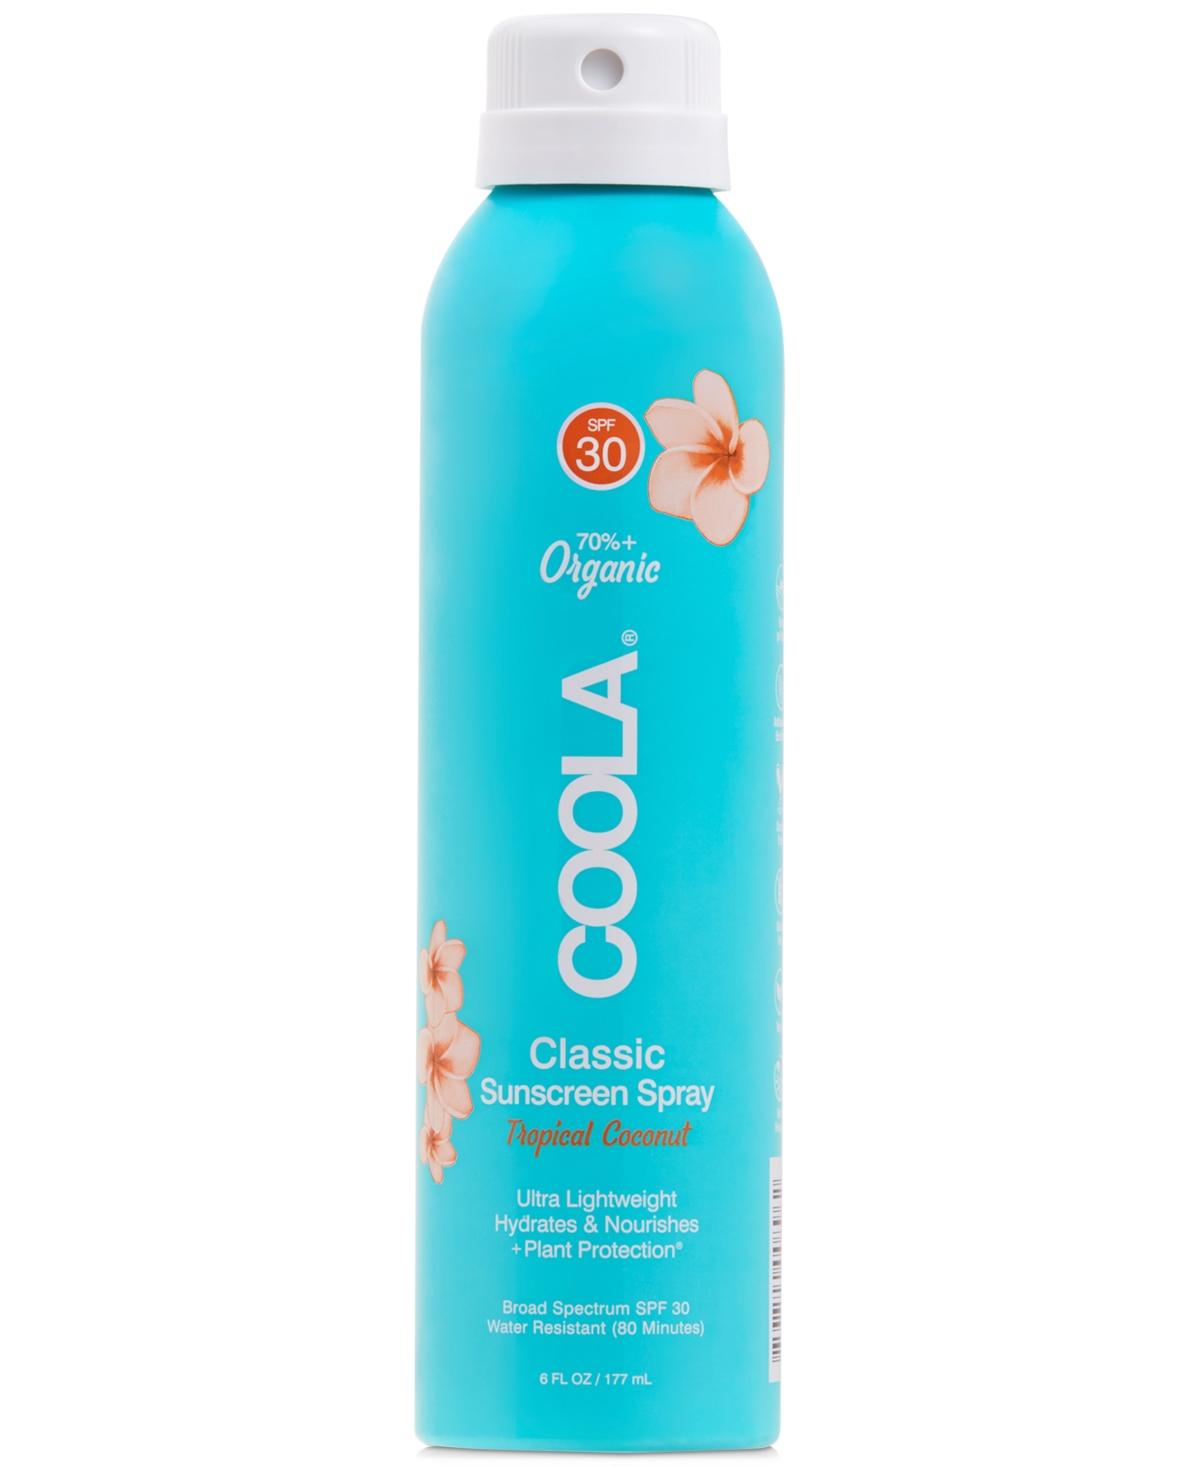 Classic Body Sunscreen Spray Spf 30 - Tropical Coconut, 6 oz.